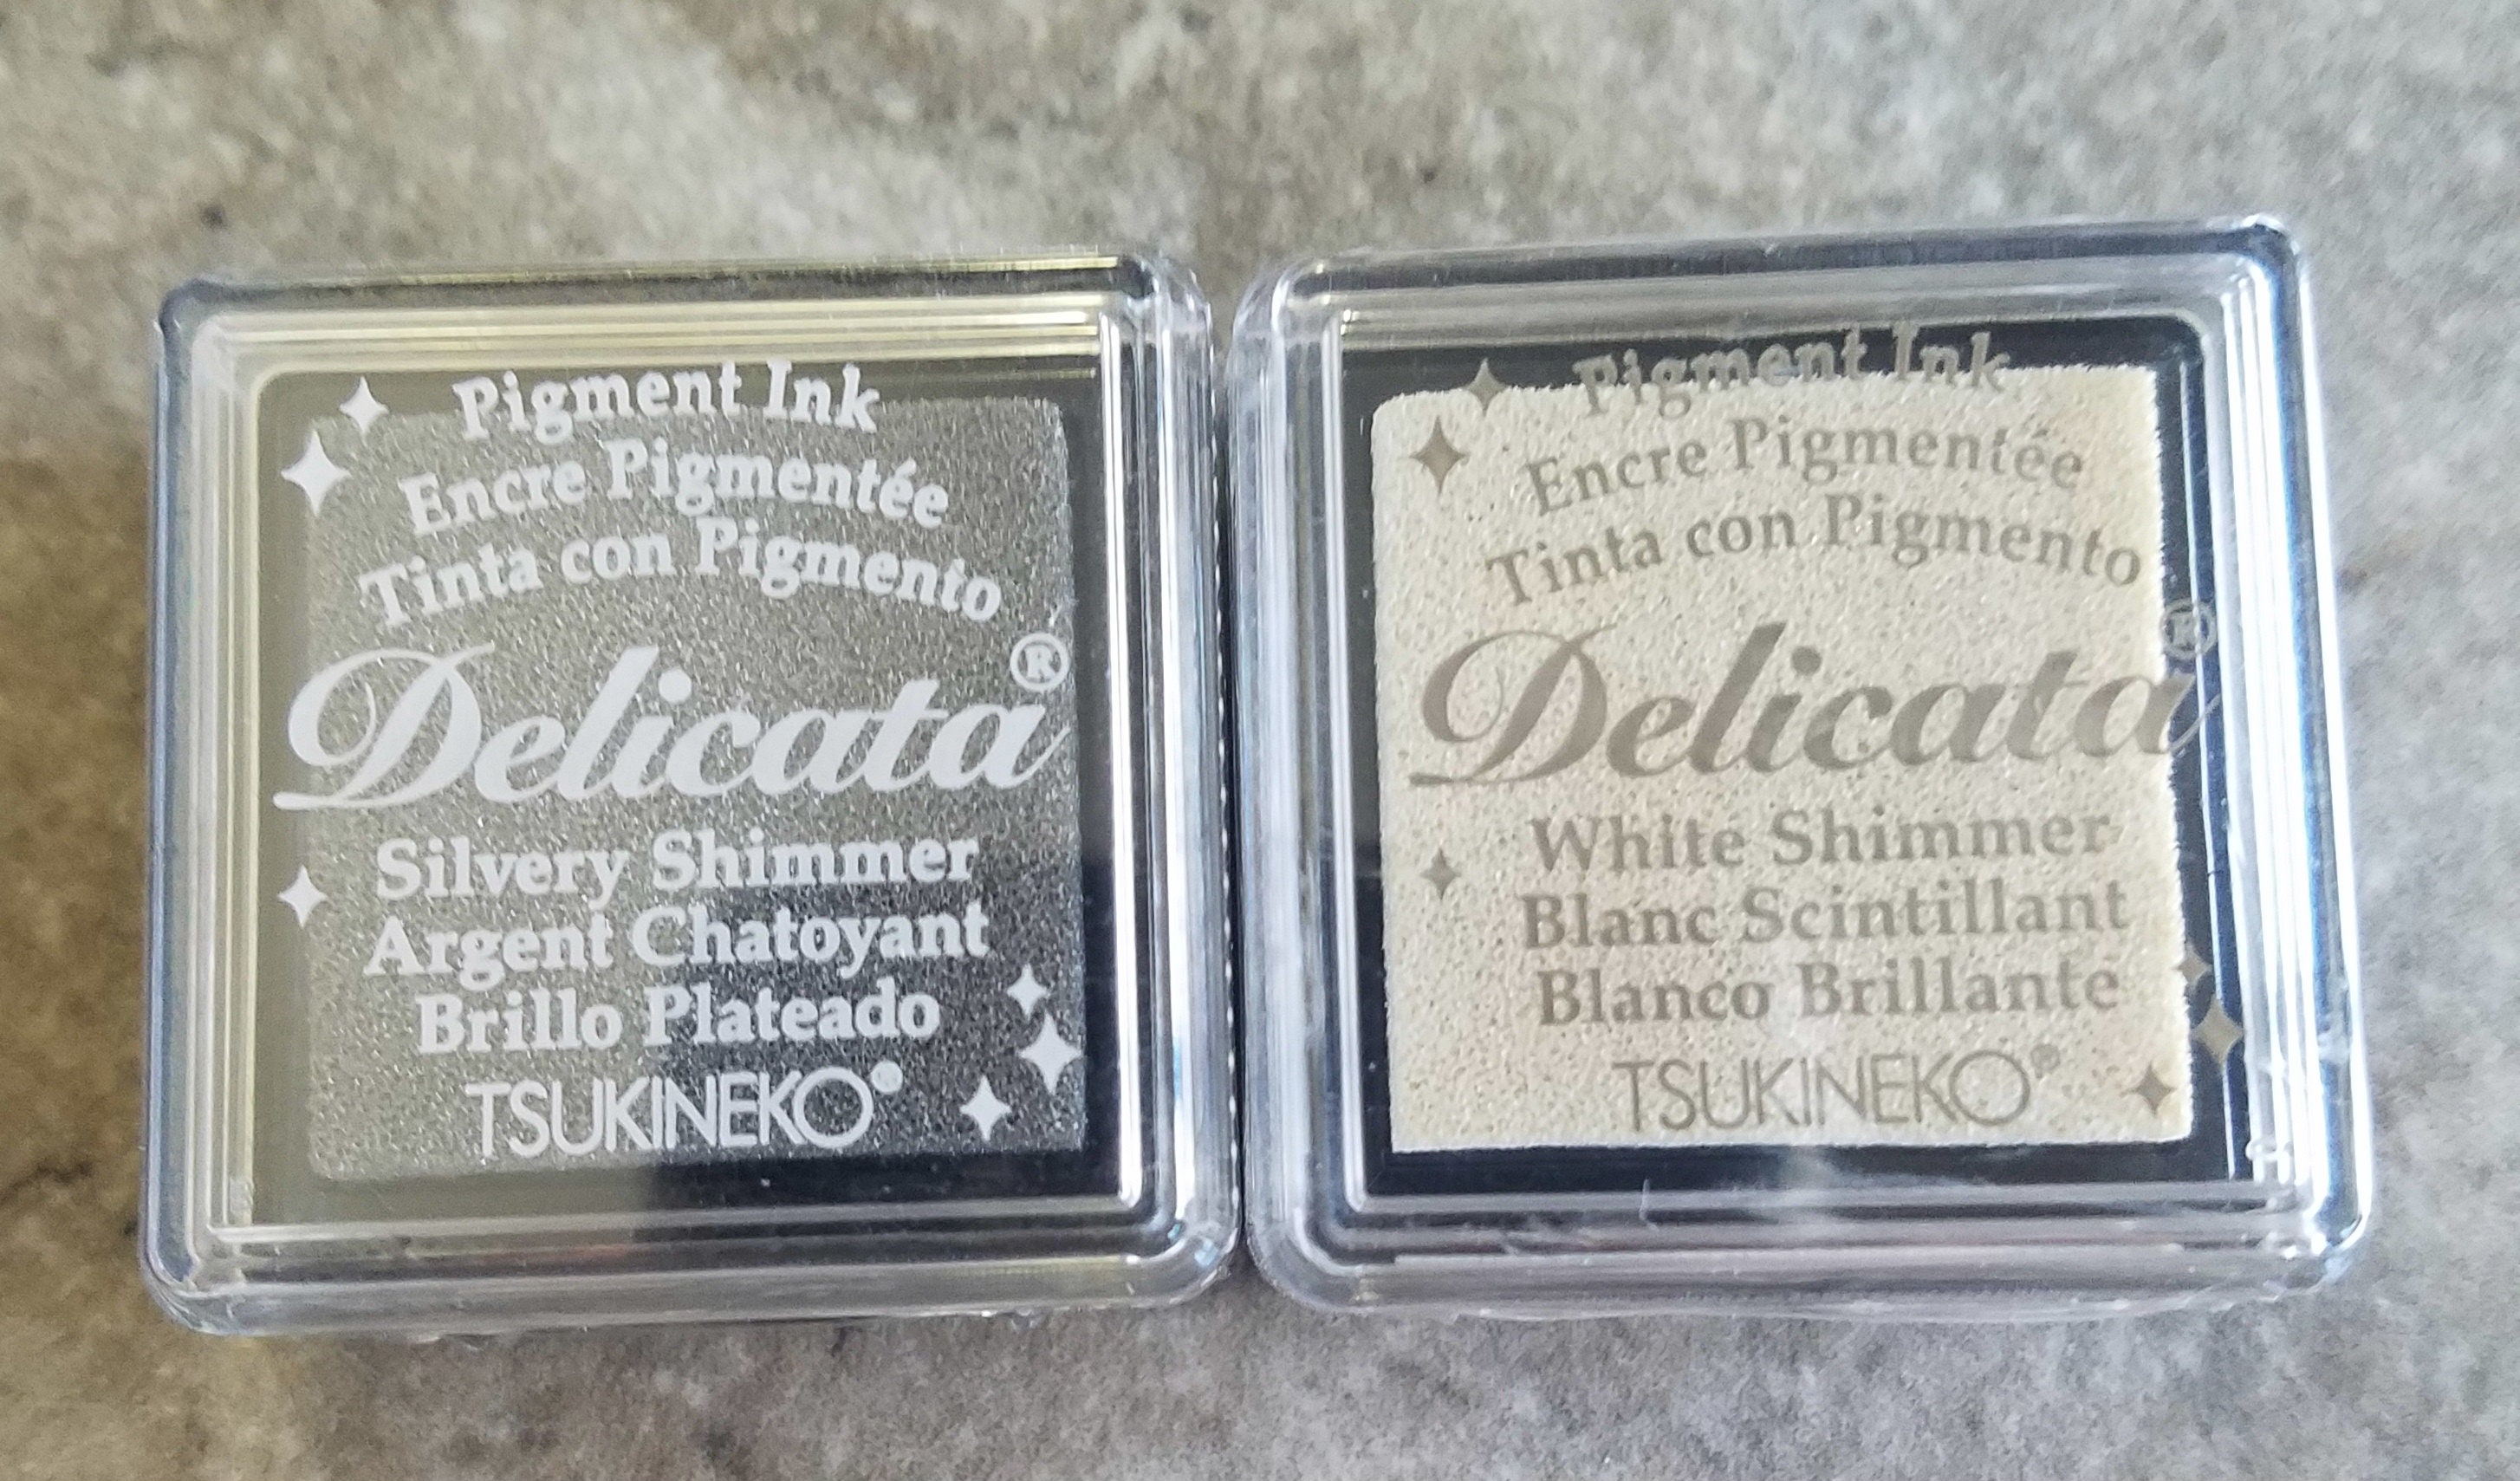 Tsukineko Delicata Pigment Ink